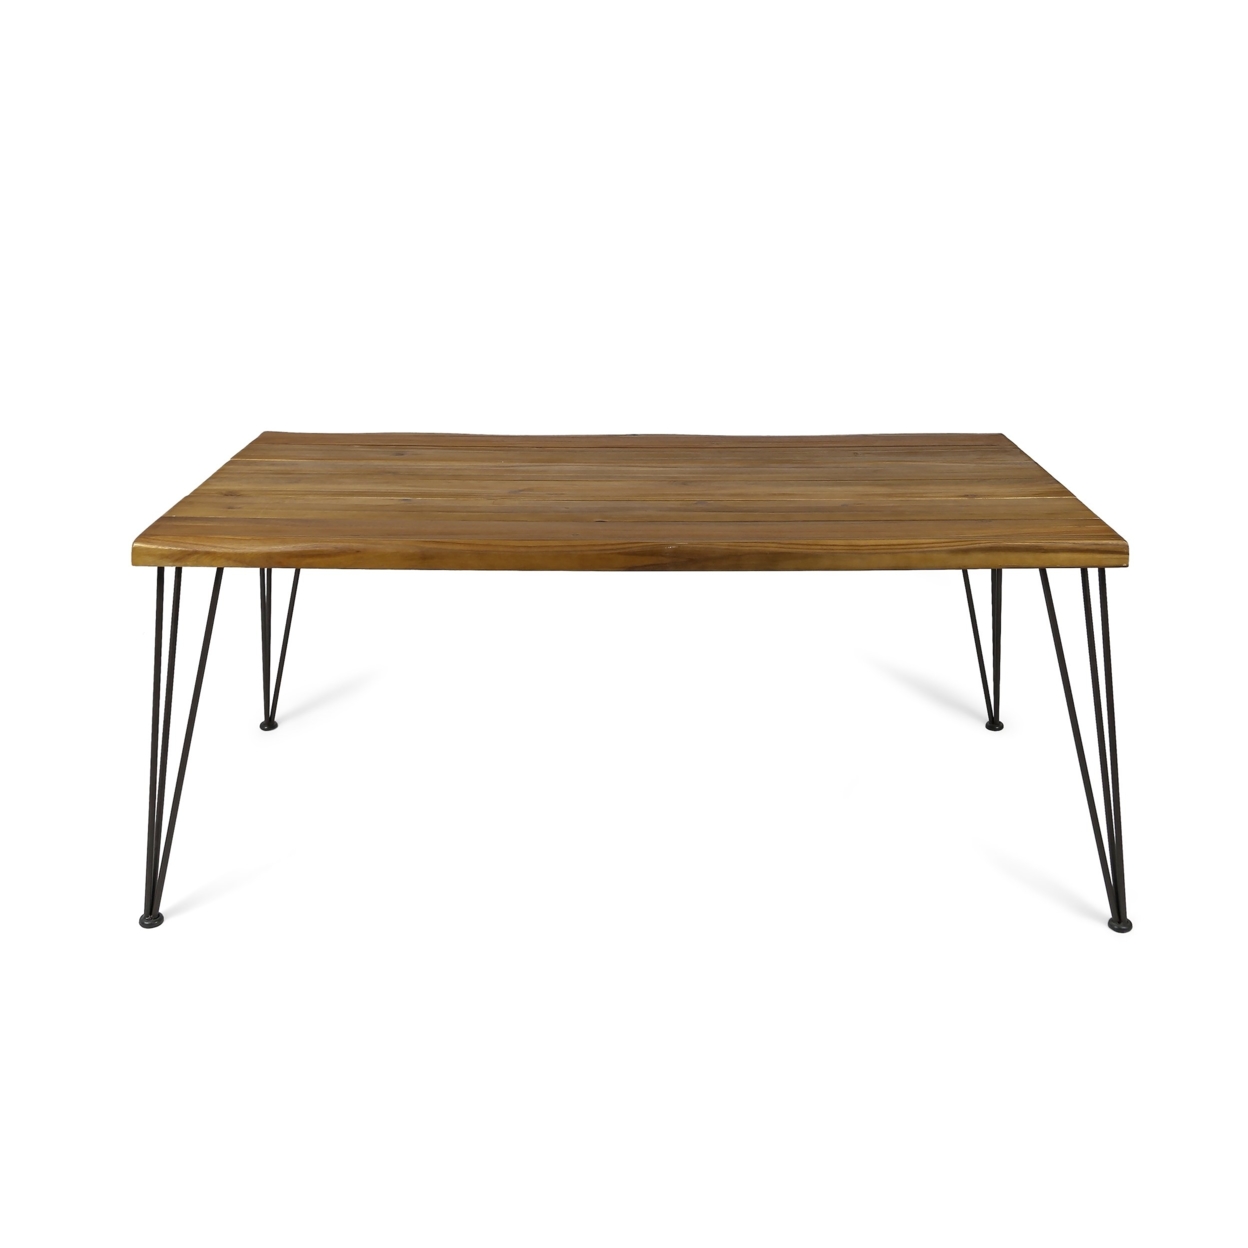 Kama Indoor Dining Table, Rectangular, 72, Acacia Wood Table Top, Rustic Iron Hairpin Legs, Teak Finish